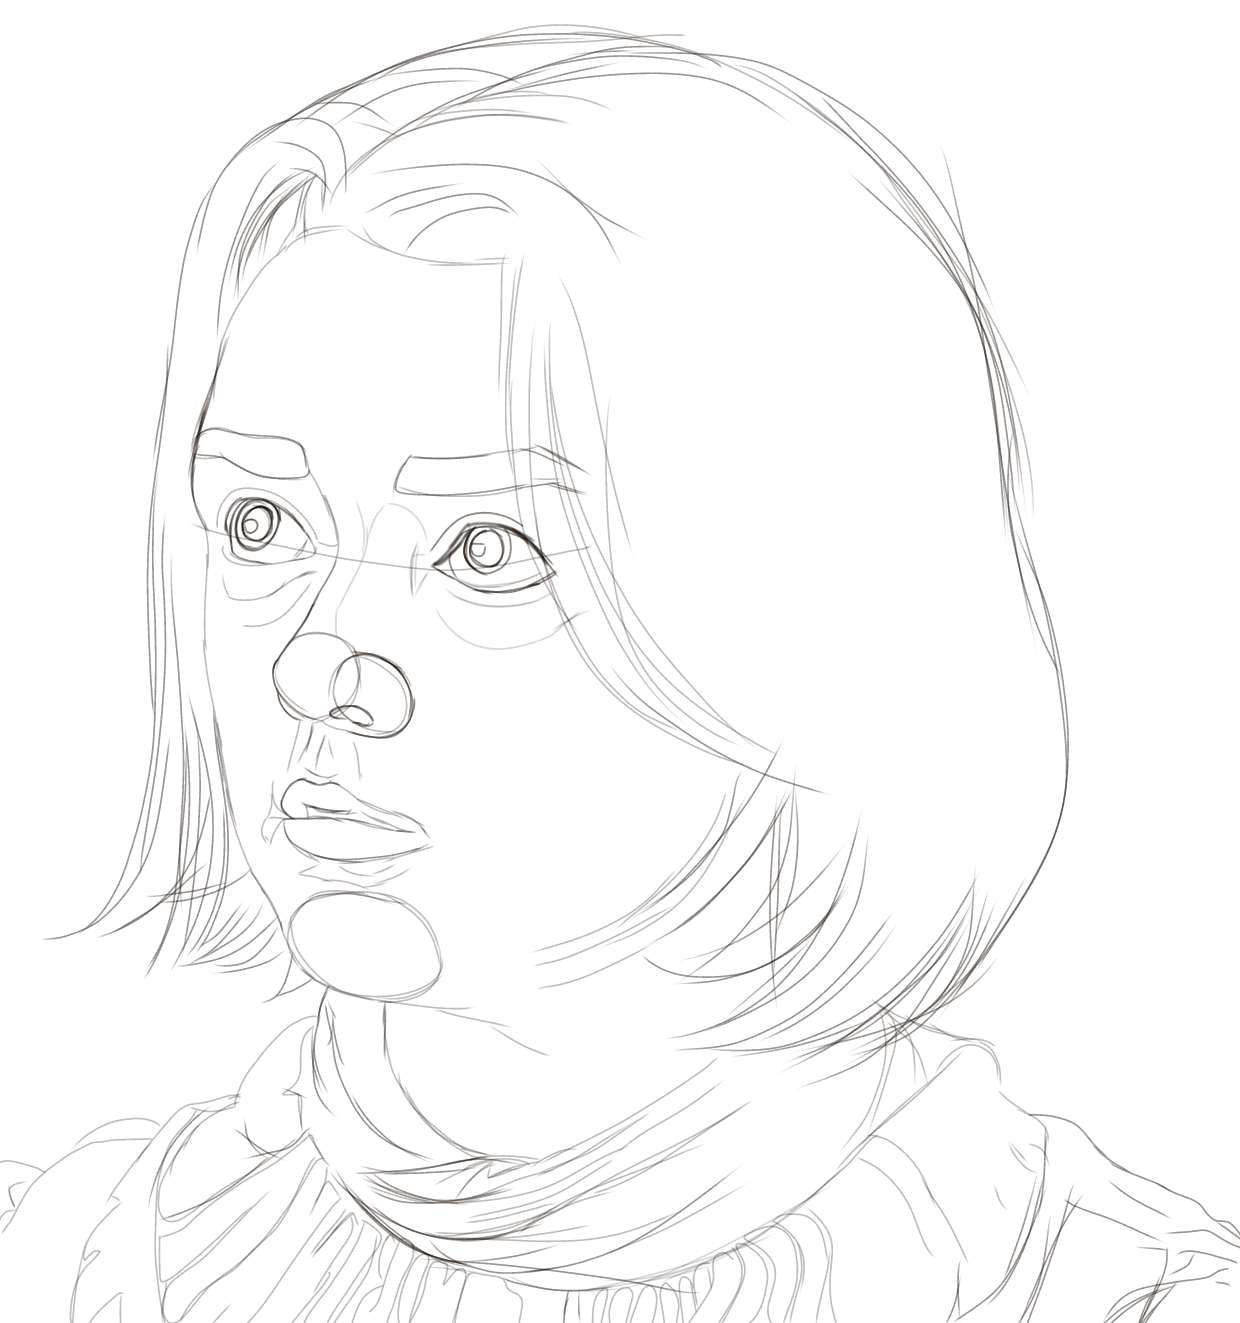 Francisftlp-Digital Drawing of Arya Stark-Step 1.png